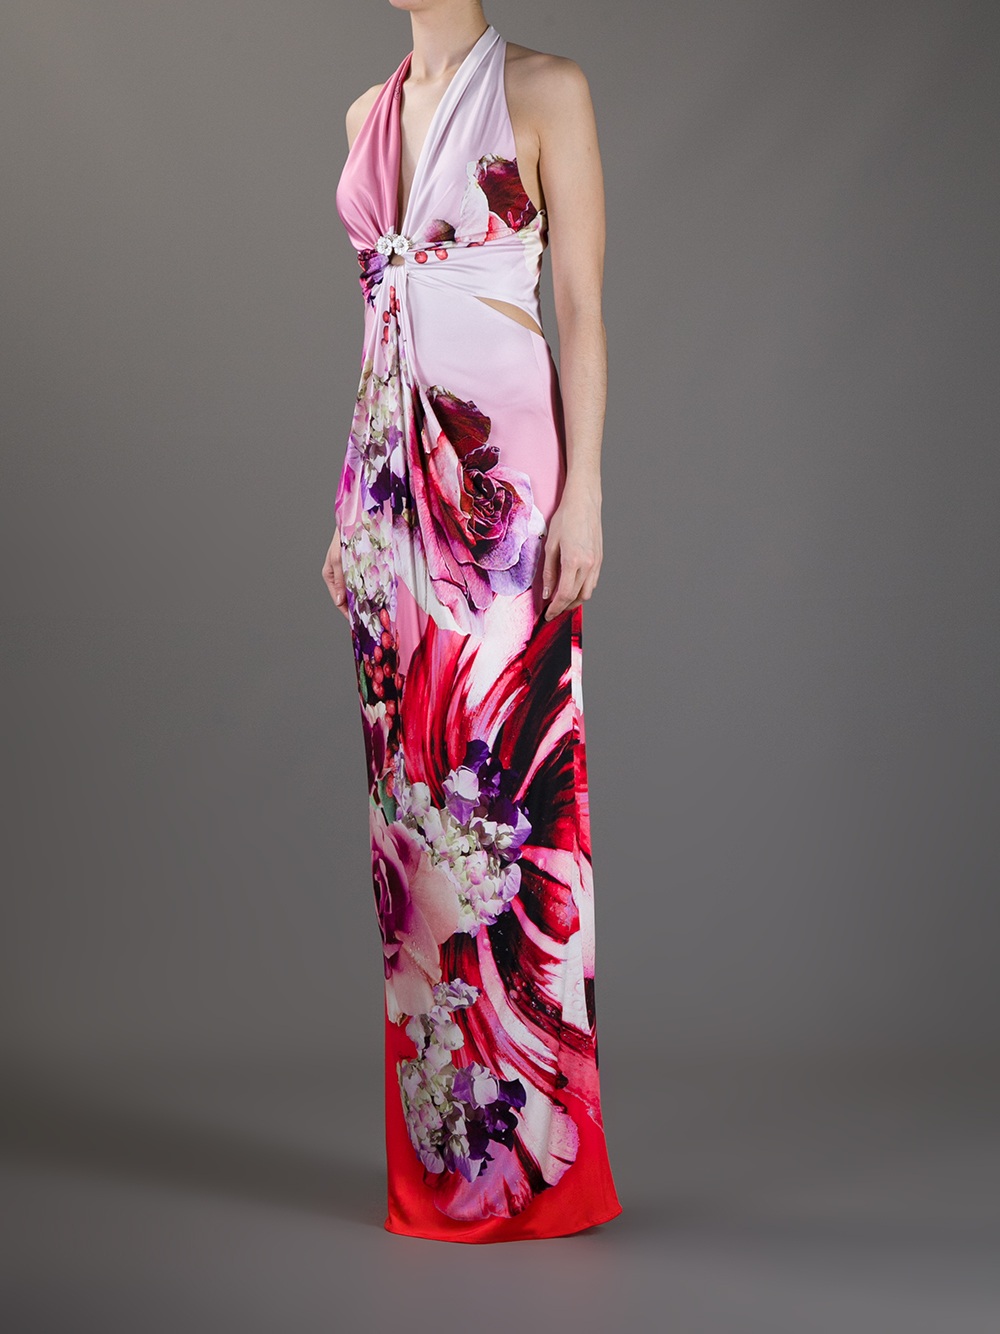 Lyst - Roberto Cavalli Printed Halterneck Dress in Pink